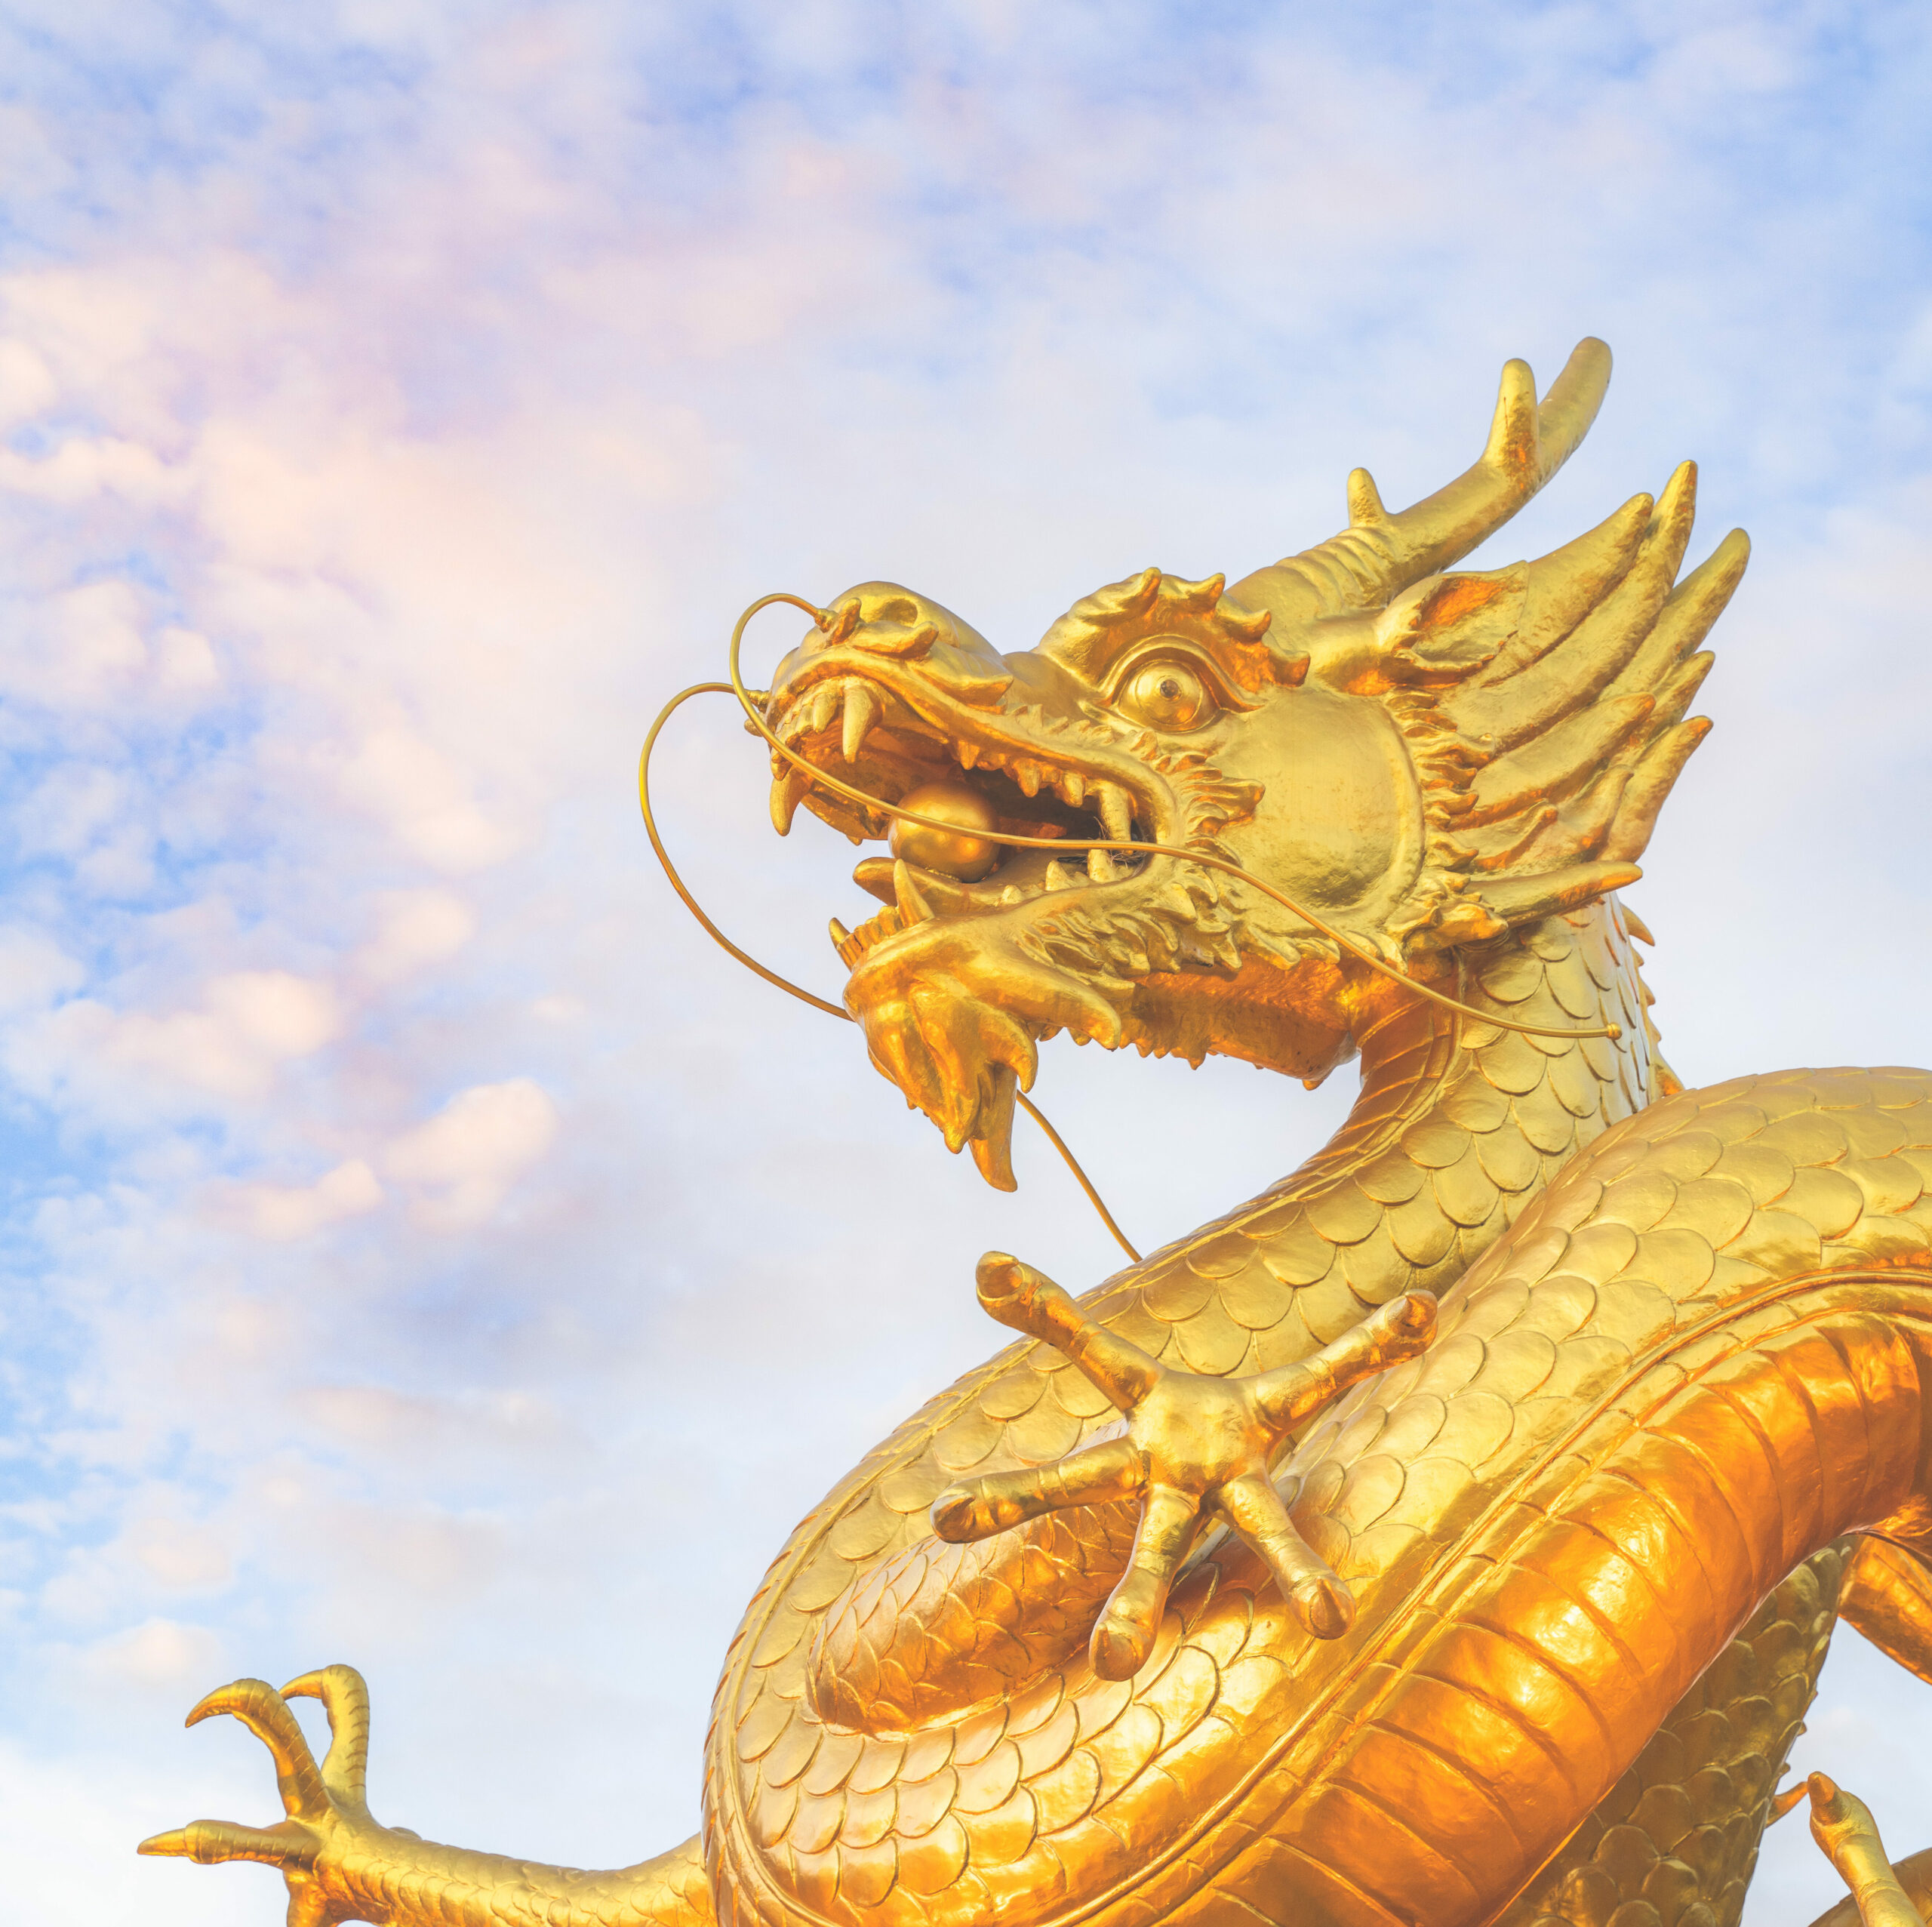 Phuket’s dragon statue